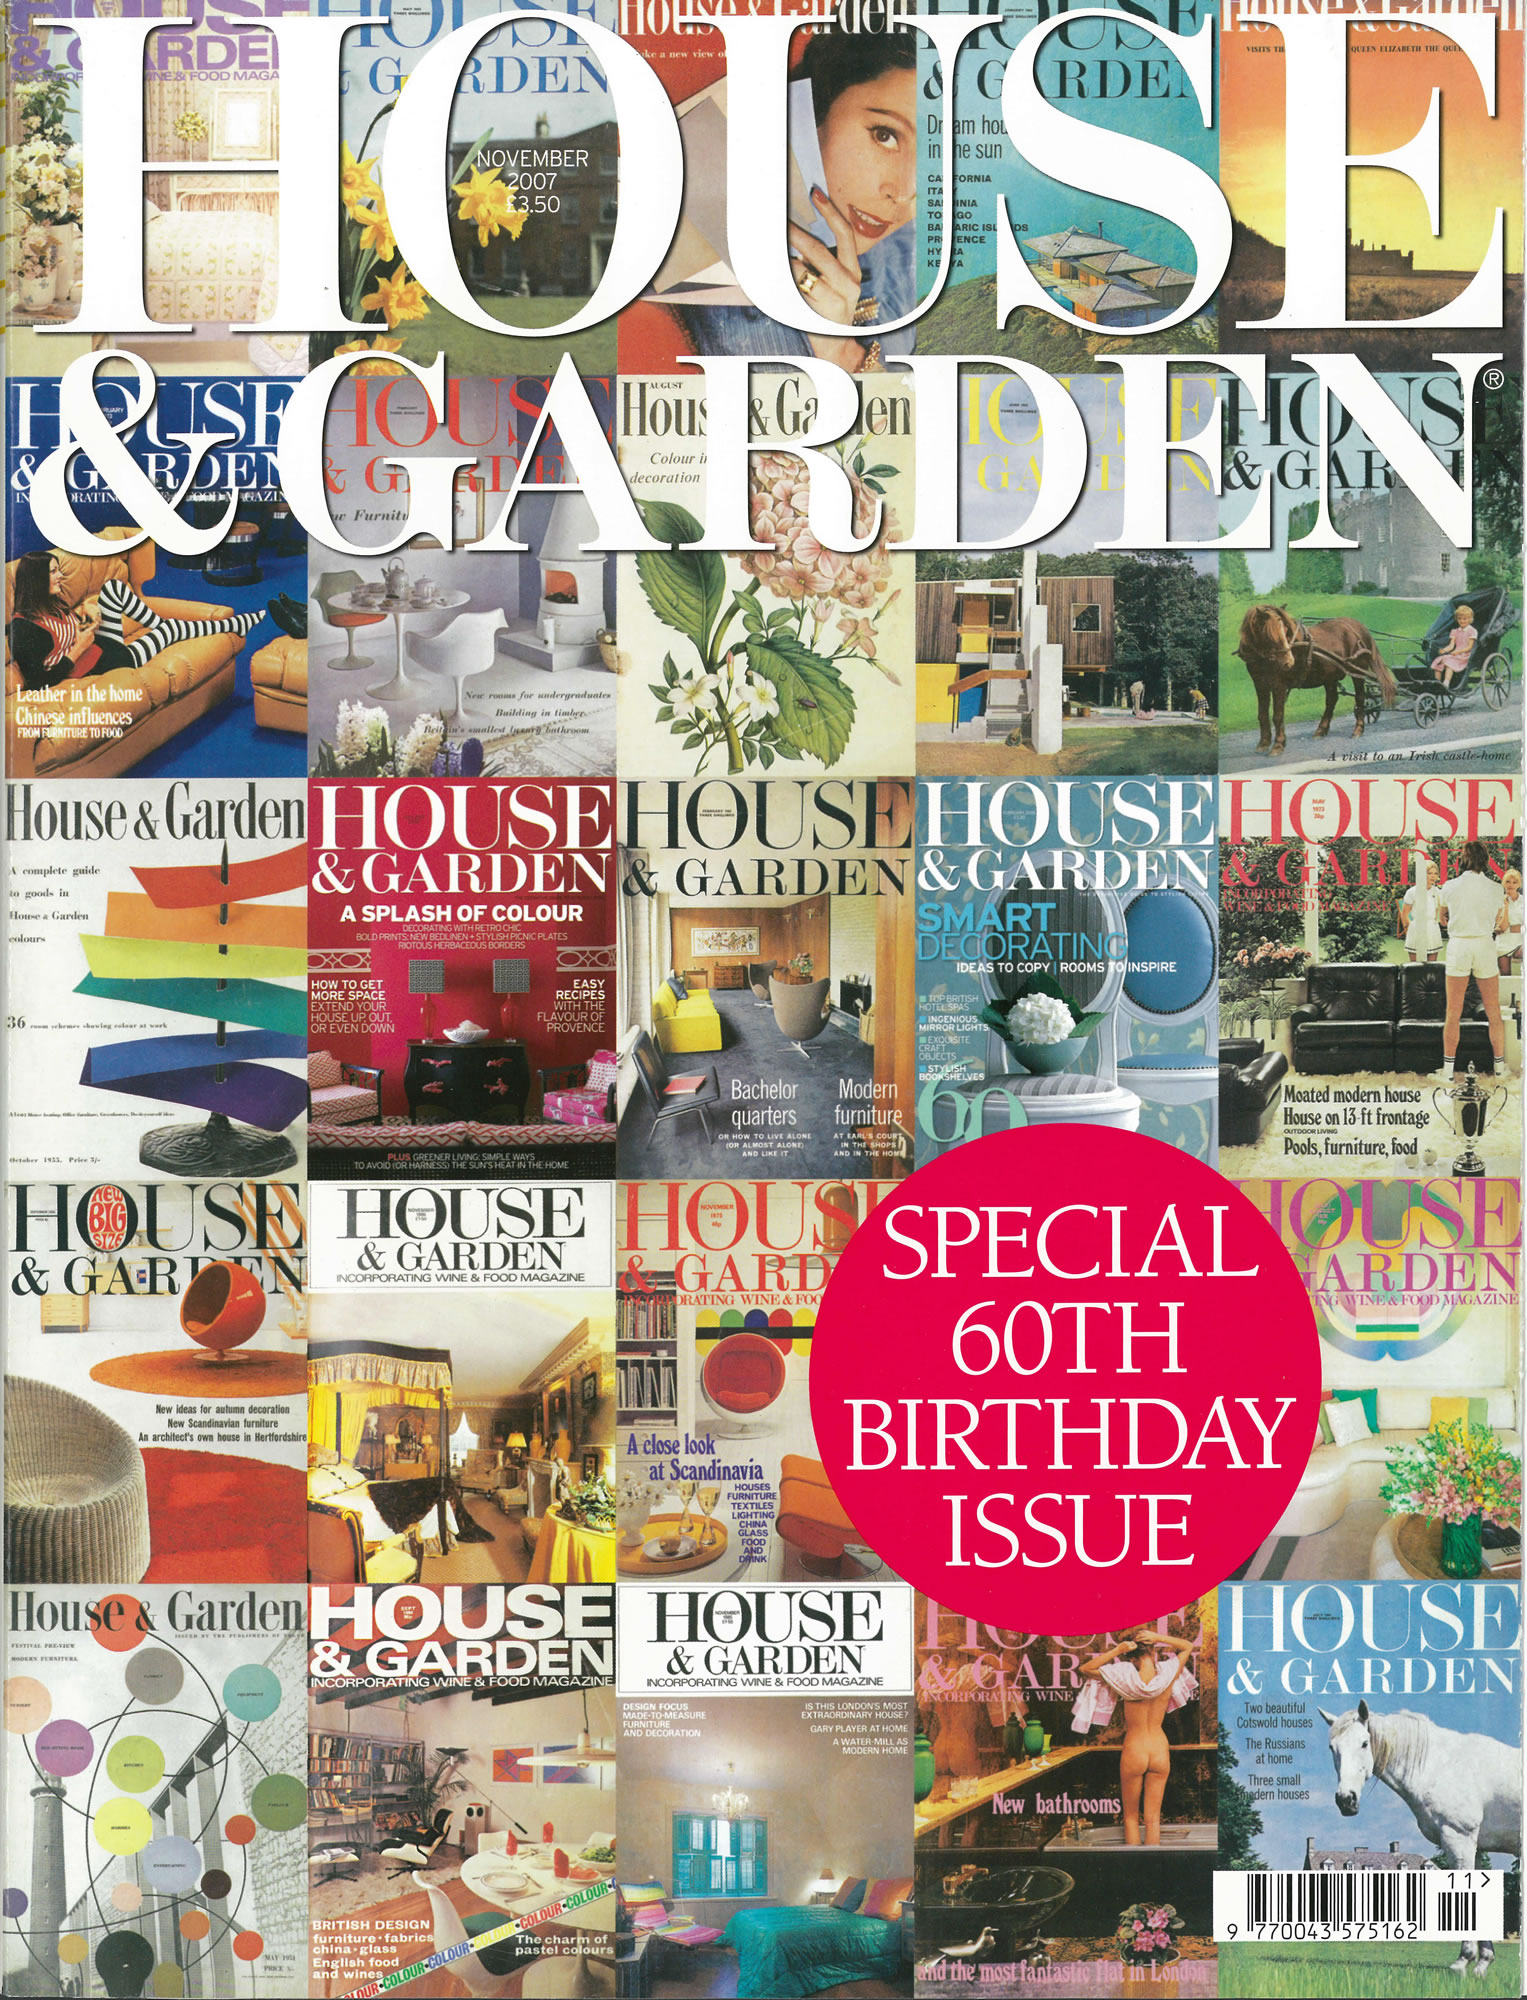 House & Garden - FP November 2007, 60th Birthday Issue